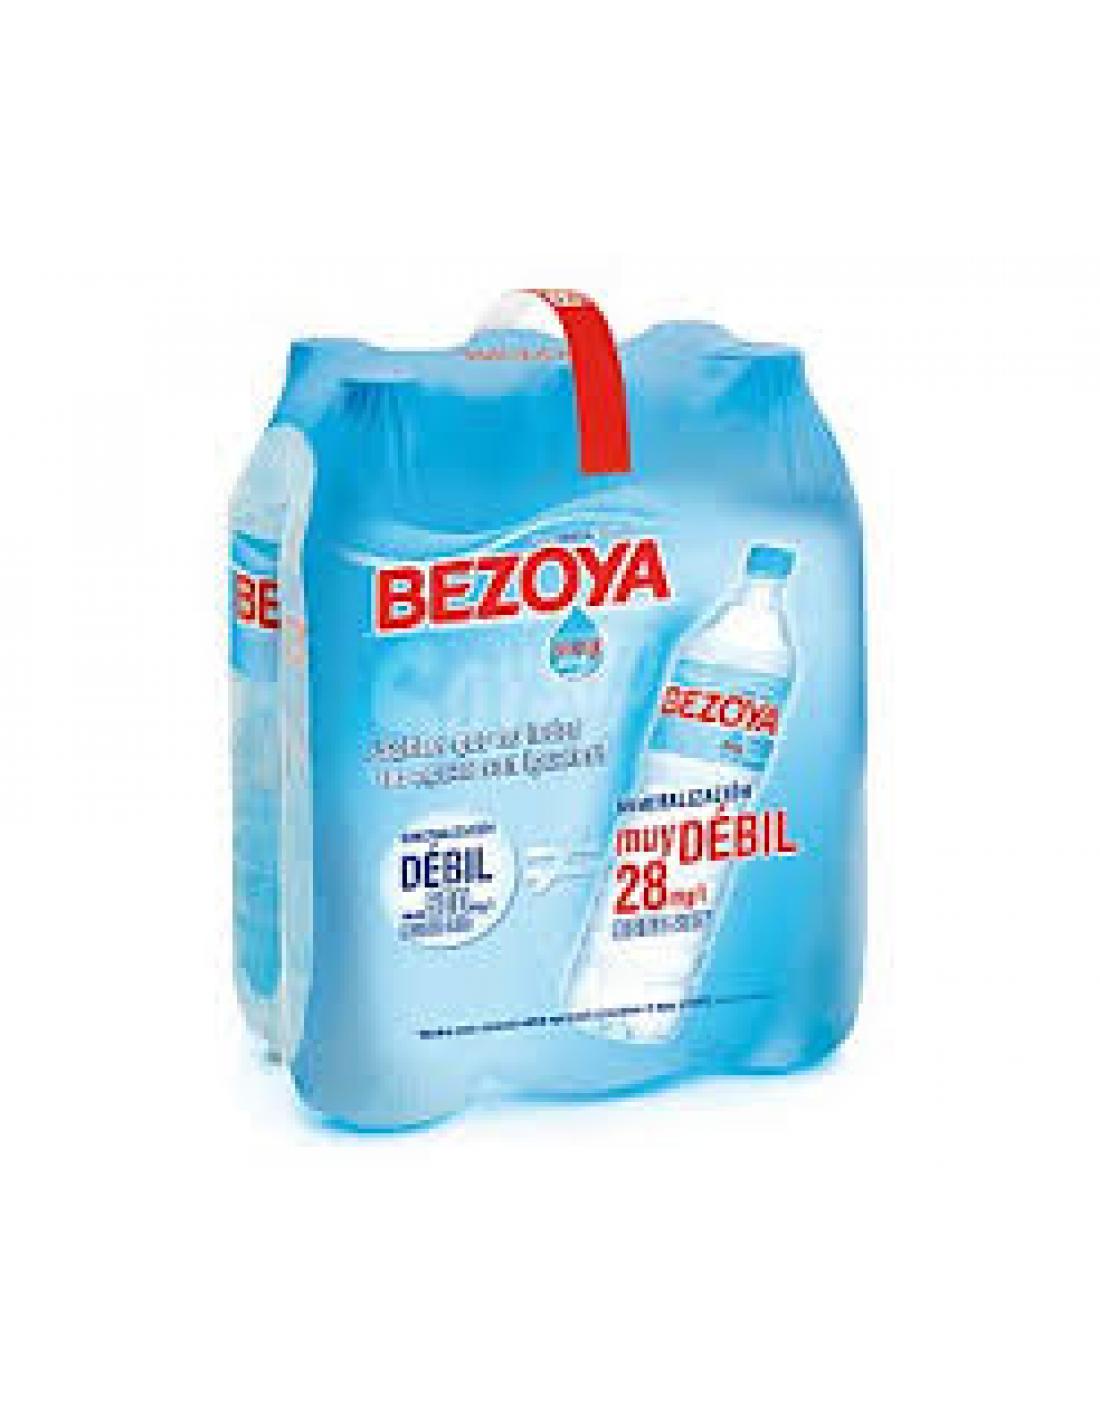 Bezoya- Agua mineral. Agua de mineralización muy débil – Pack de 6